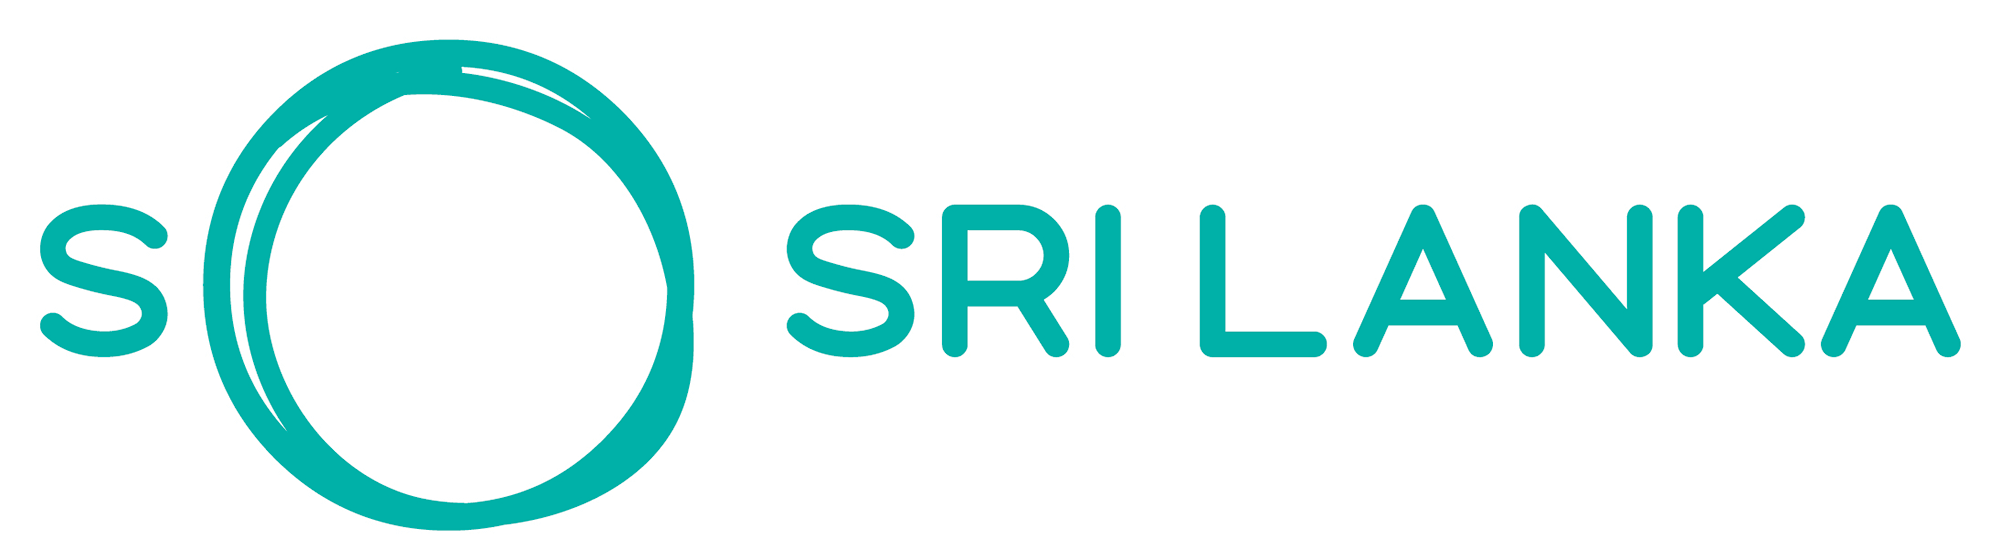 sri lanka tourism logo design